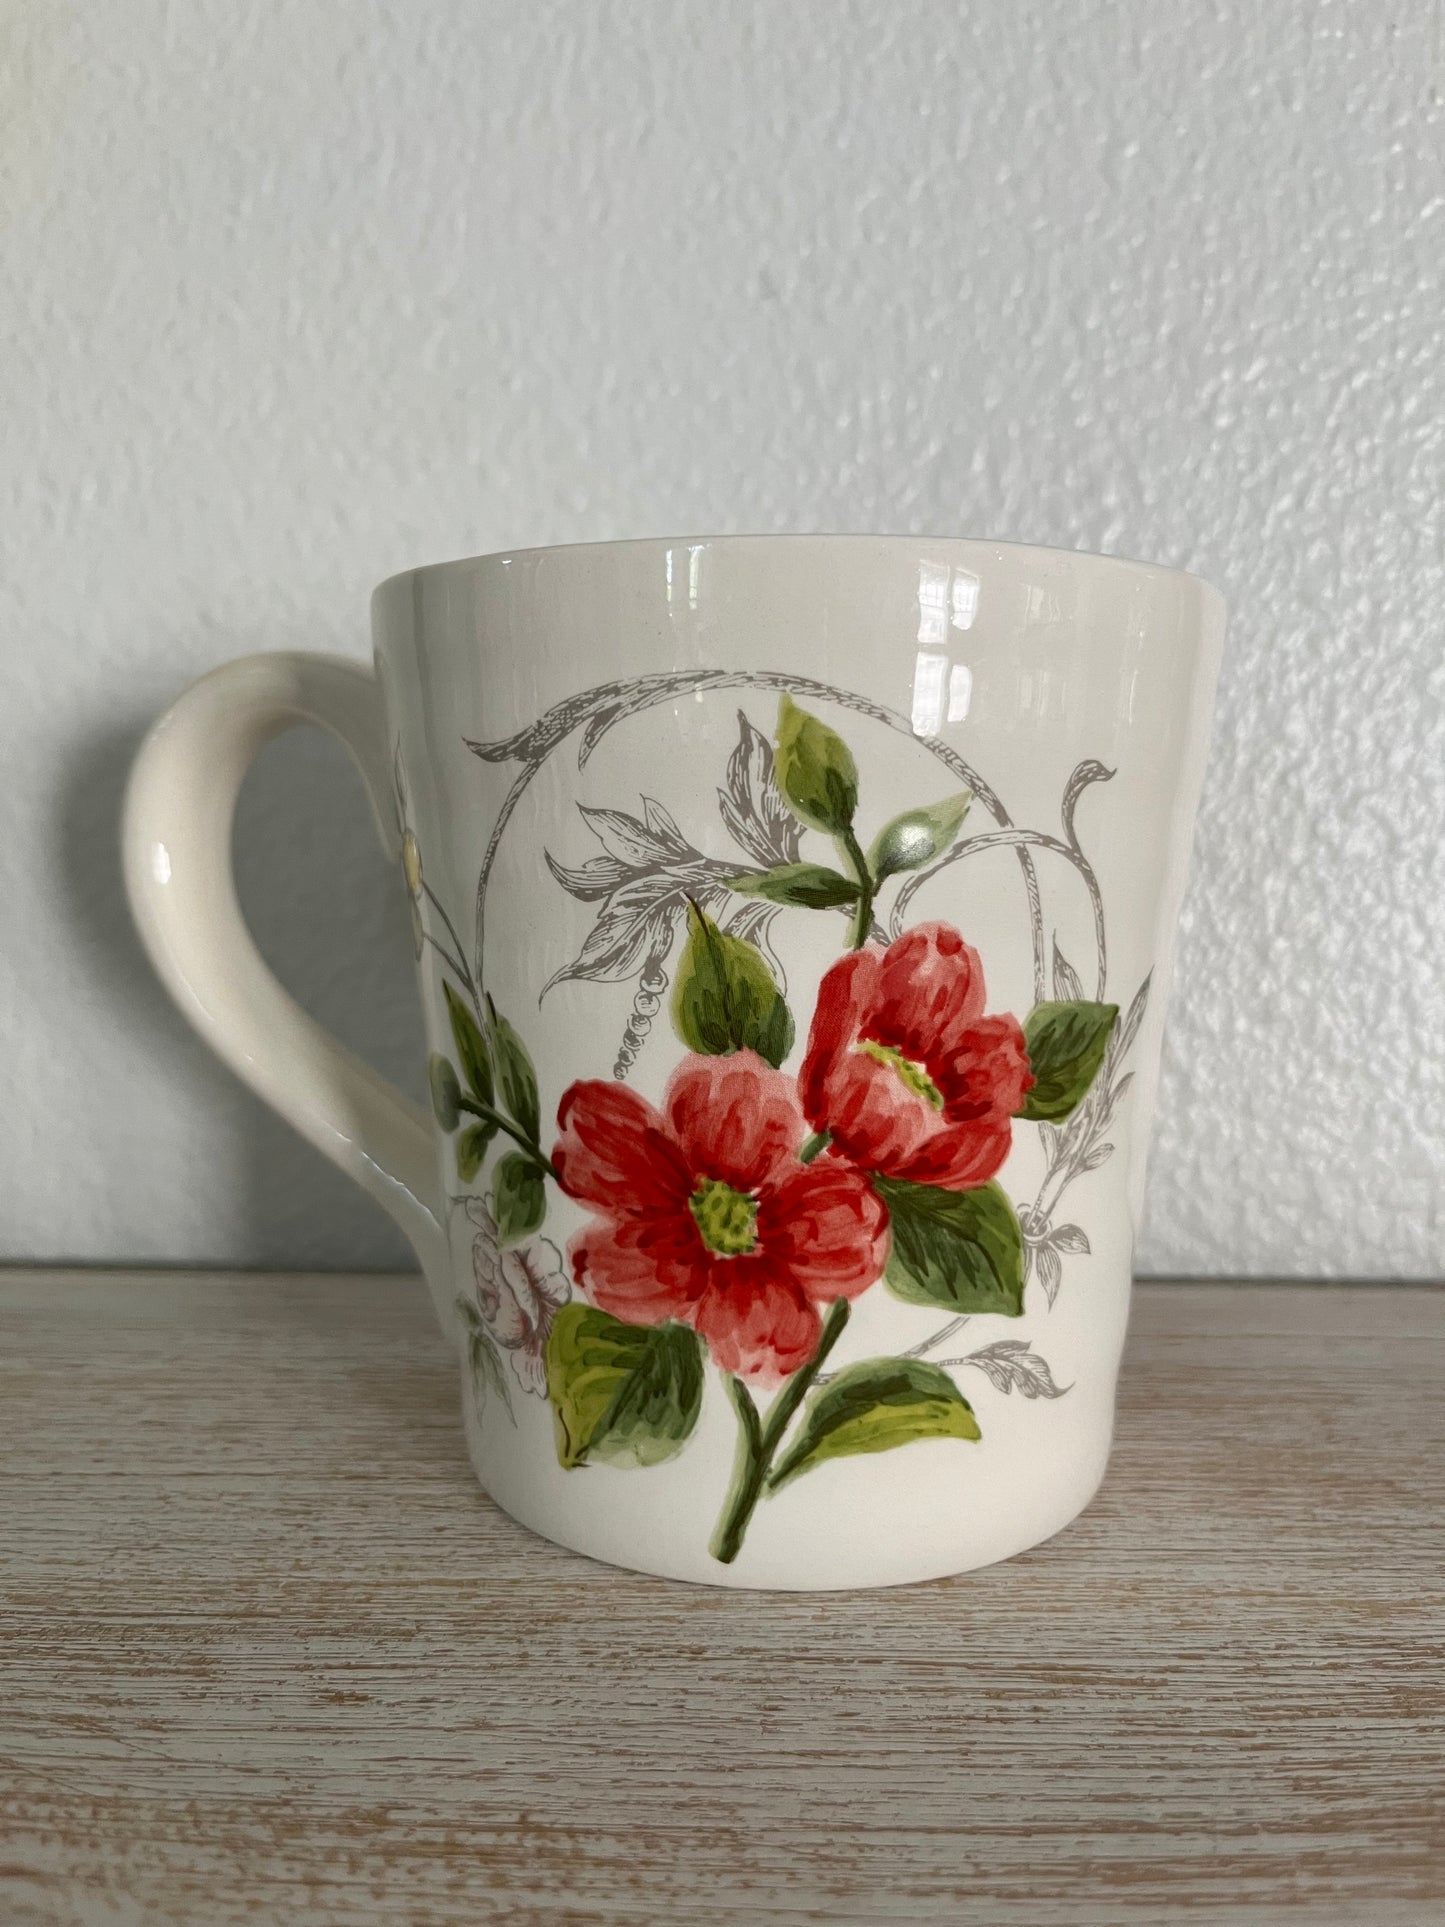 Maxcera Spring Time Ceramic Bunny Rabbit Mug